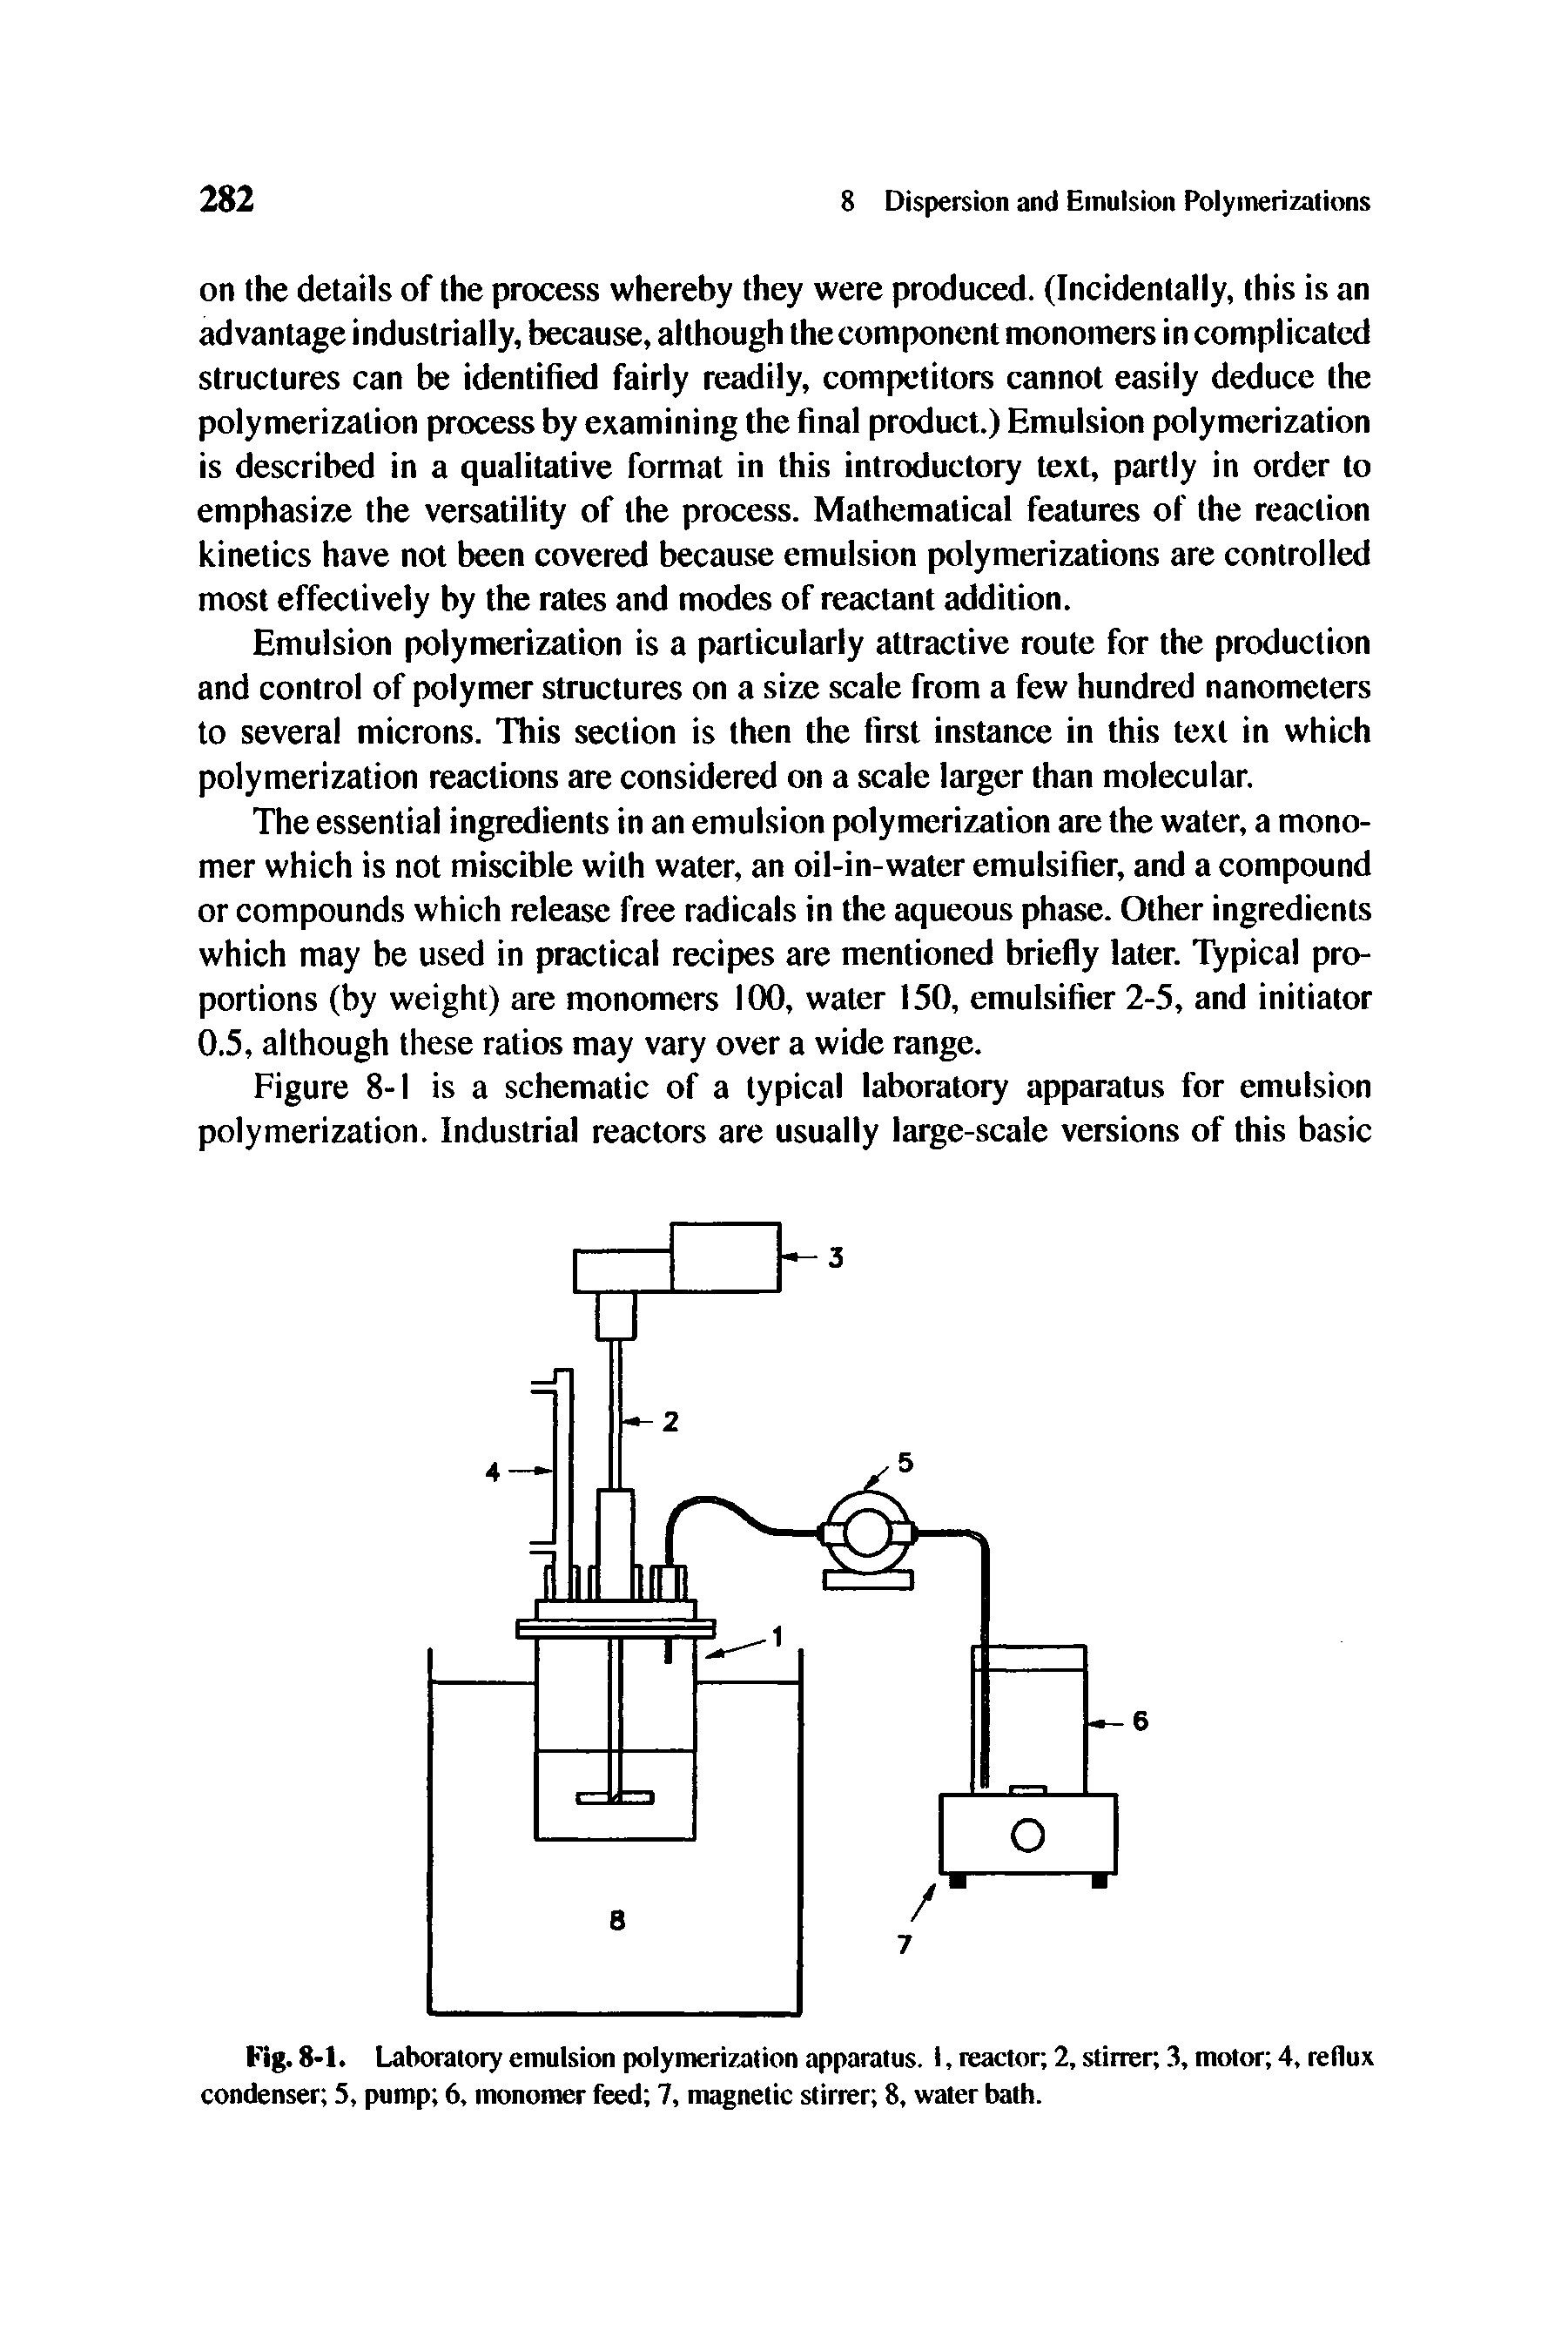 Fig. 8-1. Laboratory emulsion polymerization apparatus. I, reactor 2, stirrer 3, motor 4, reflux condenser 5, pump 6, monomer feed 7, magnetic stirrer 8, water bath.